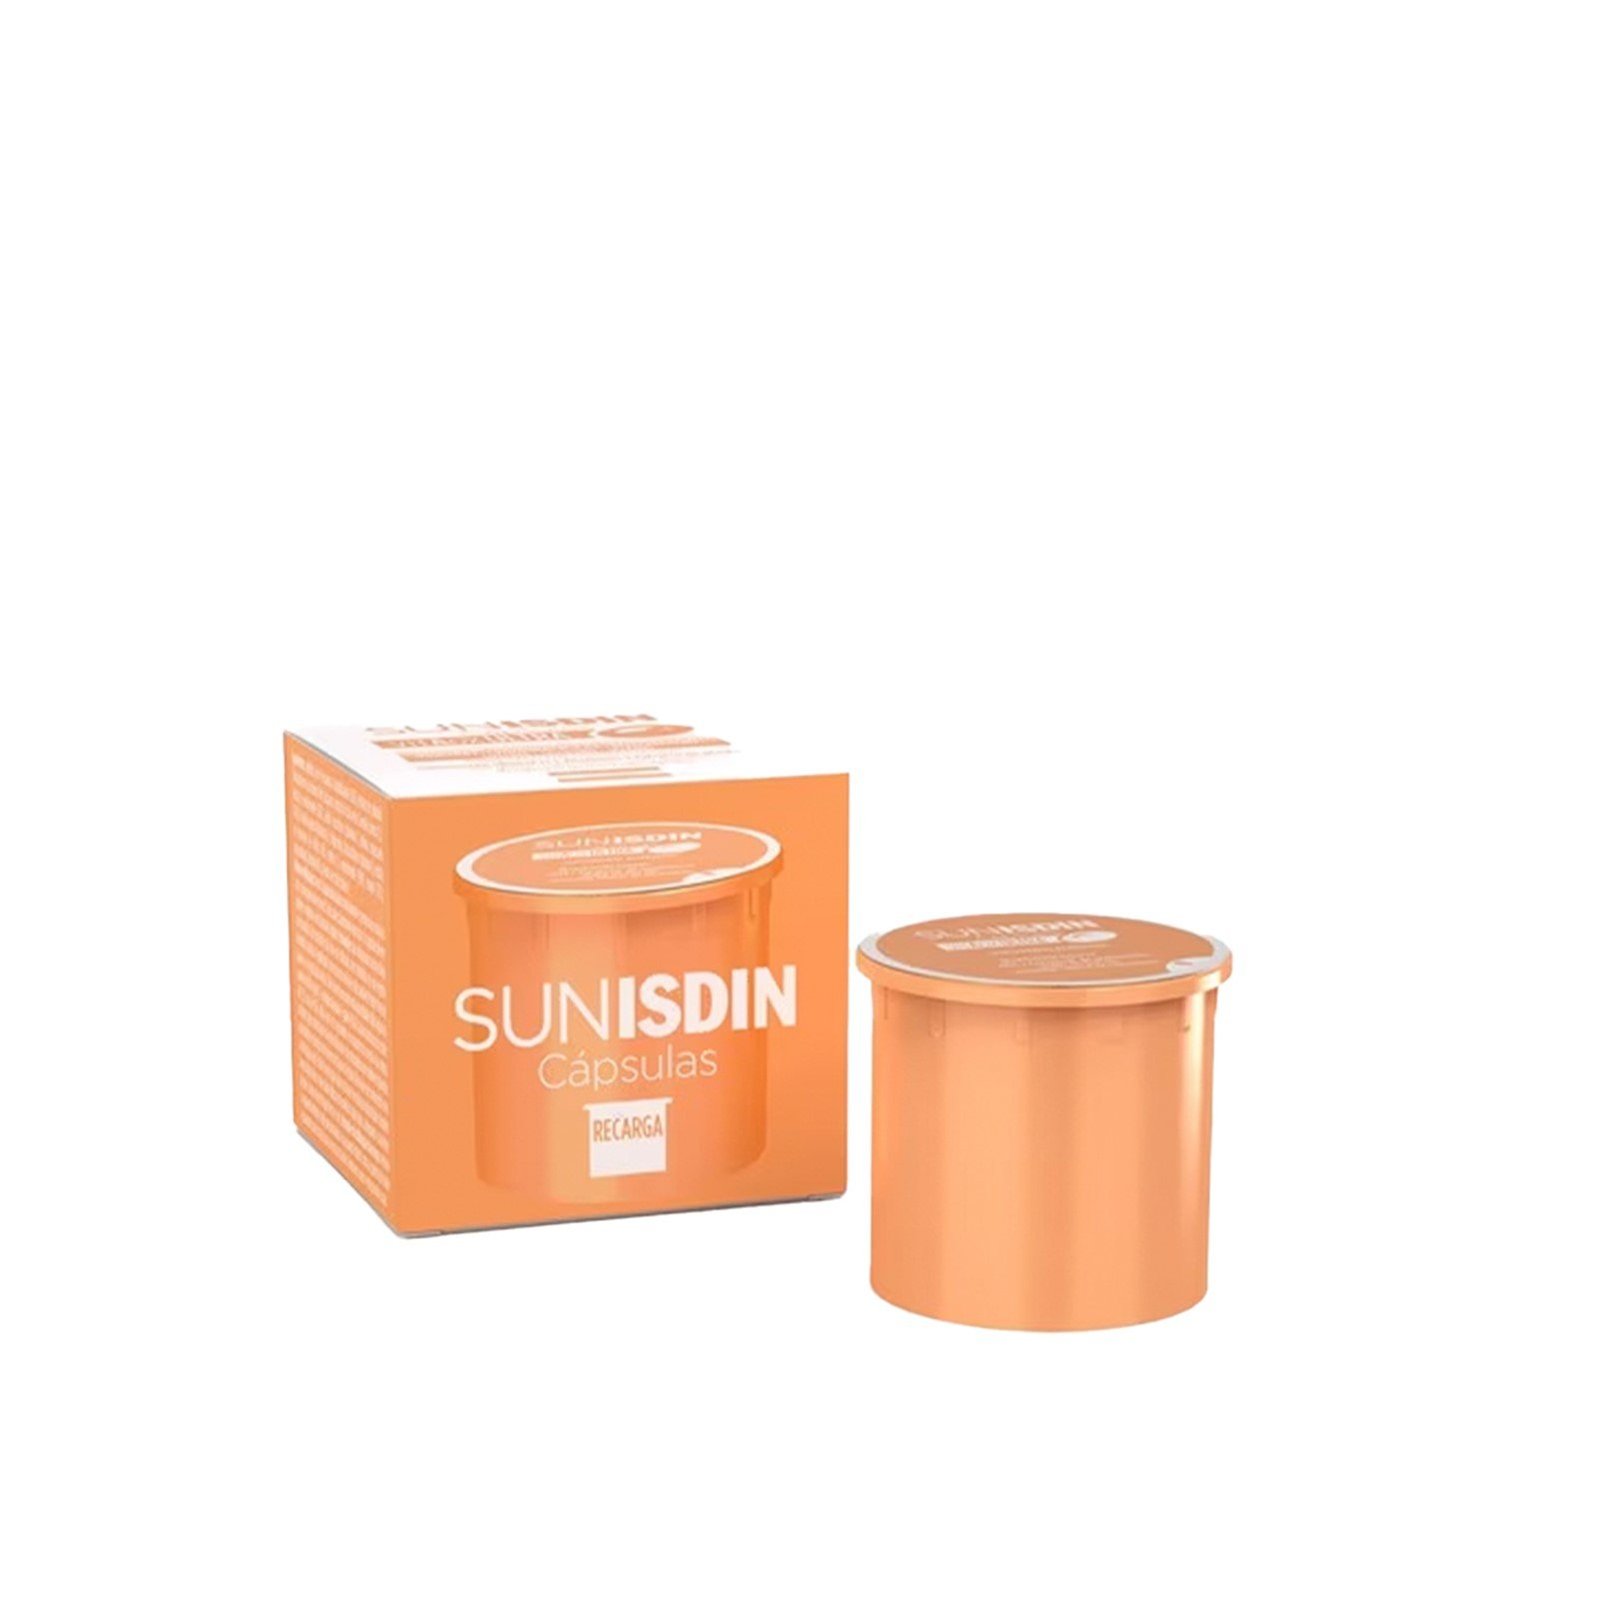 ISDIN SunISDIN VitAox Ultra Capsules Refill x30